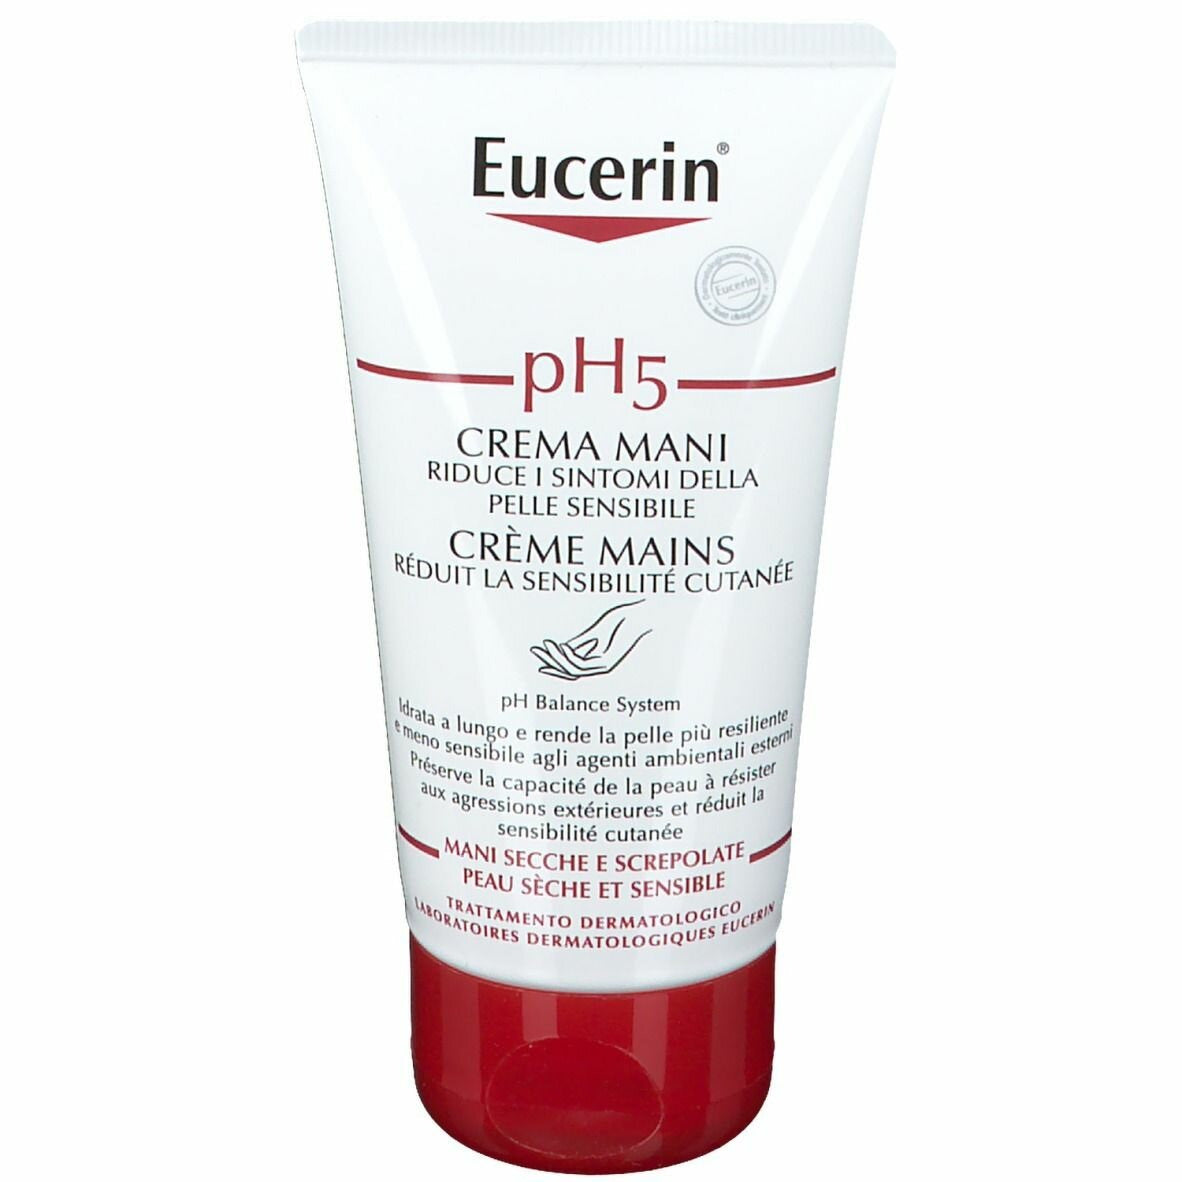 Euceerin Ph5 cream hands 75ML